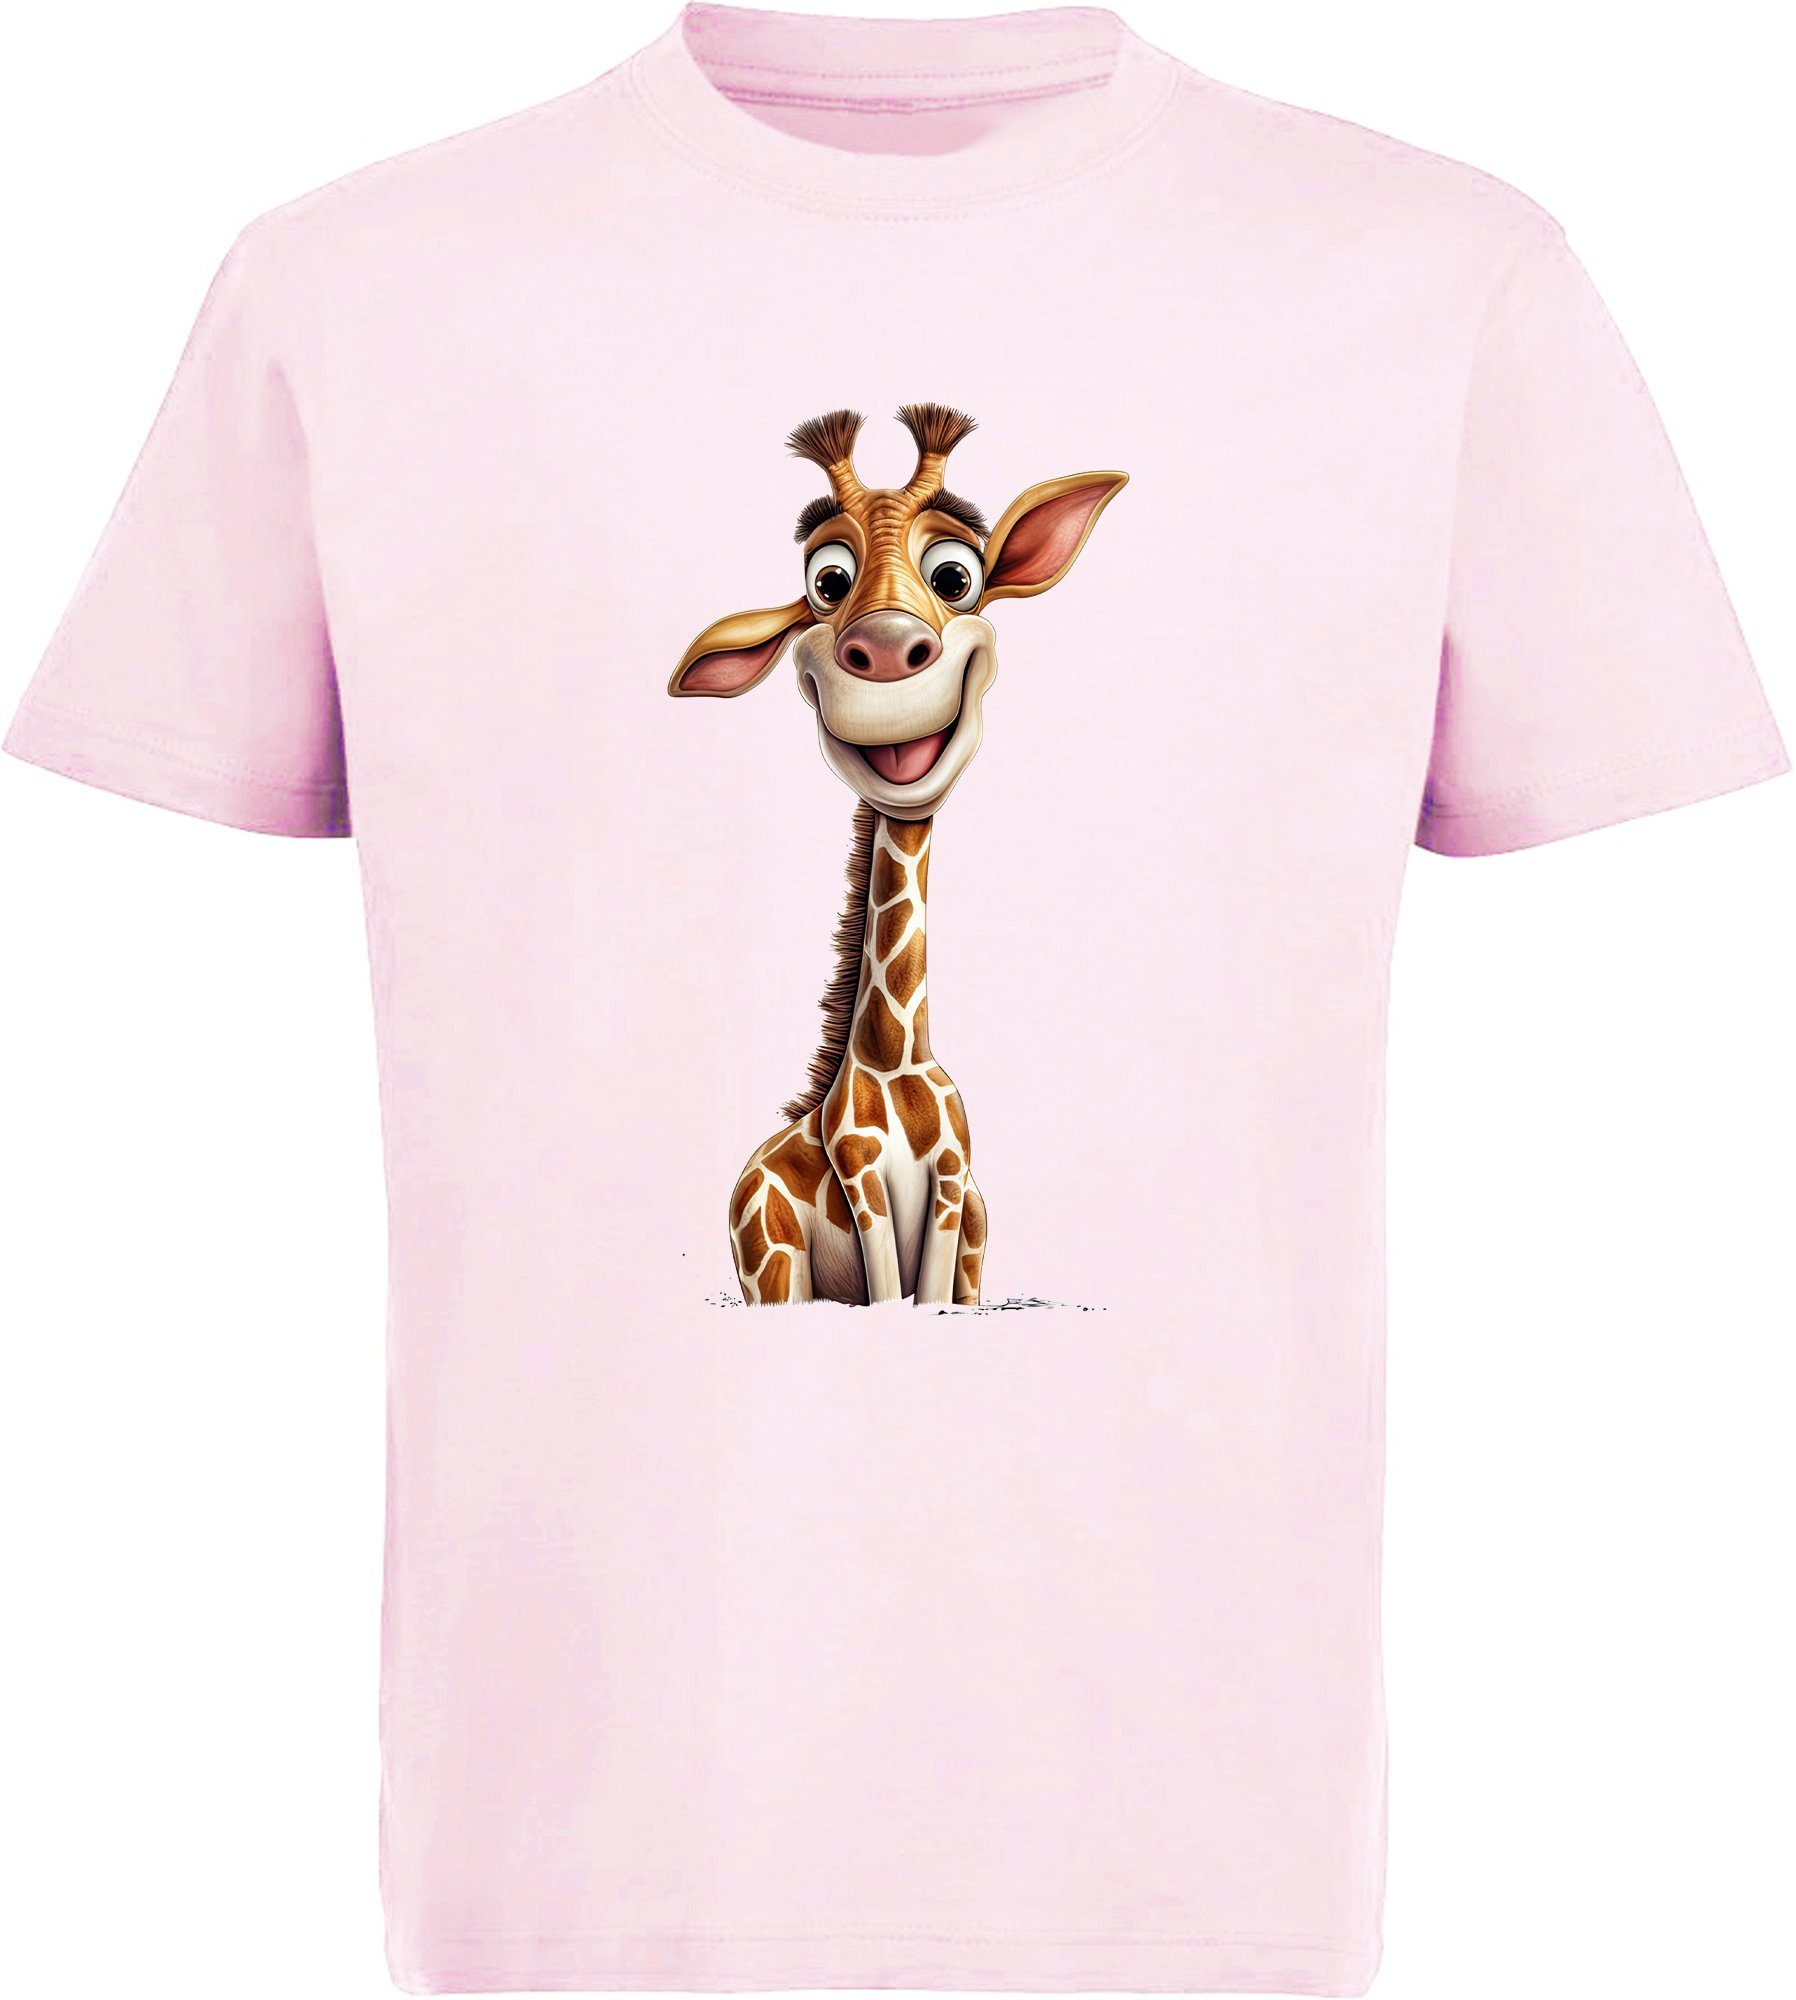 MyDesign24 T-Shirt Print Wildtier - mit Giraffe Baumwollshirt Aufdruck, bedruckt Kinder i273 rosa Shirt Baby